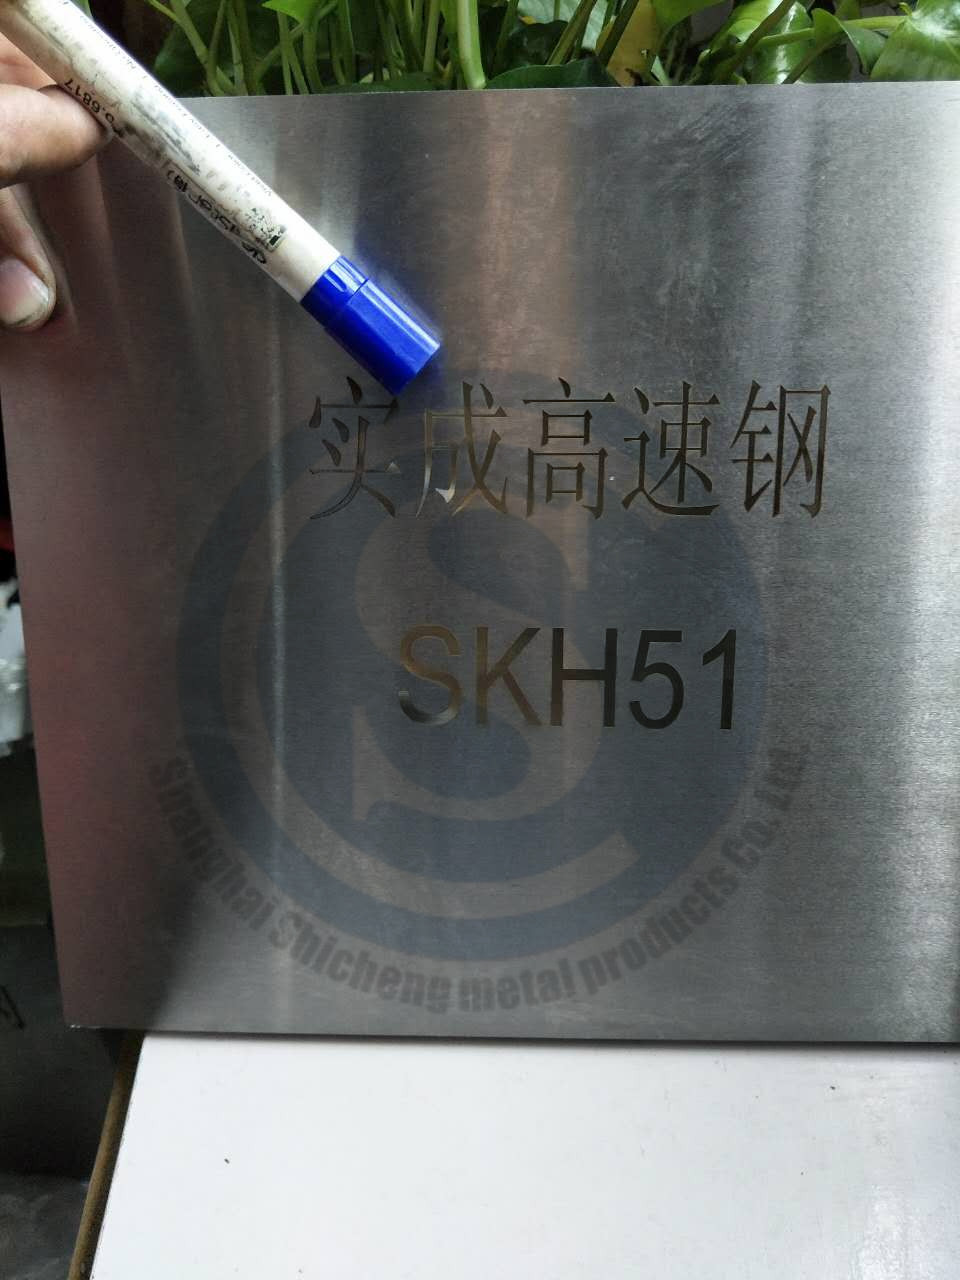 SKH51_副本 - 副本